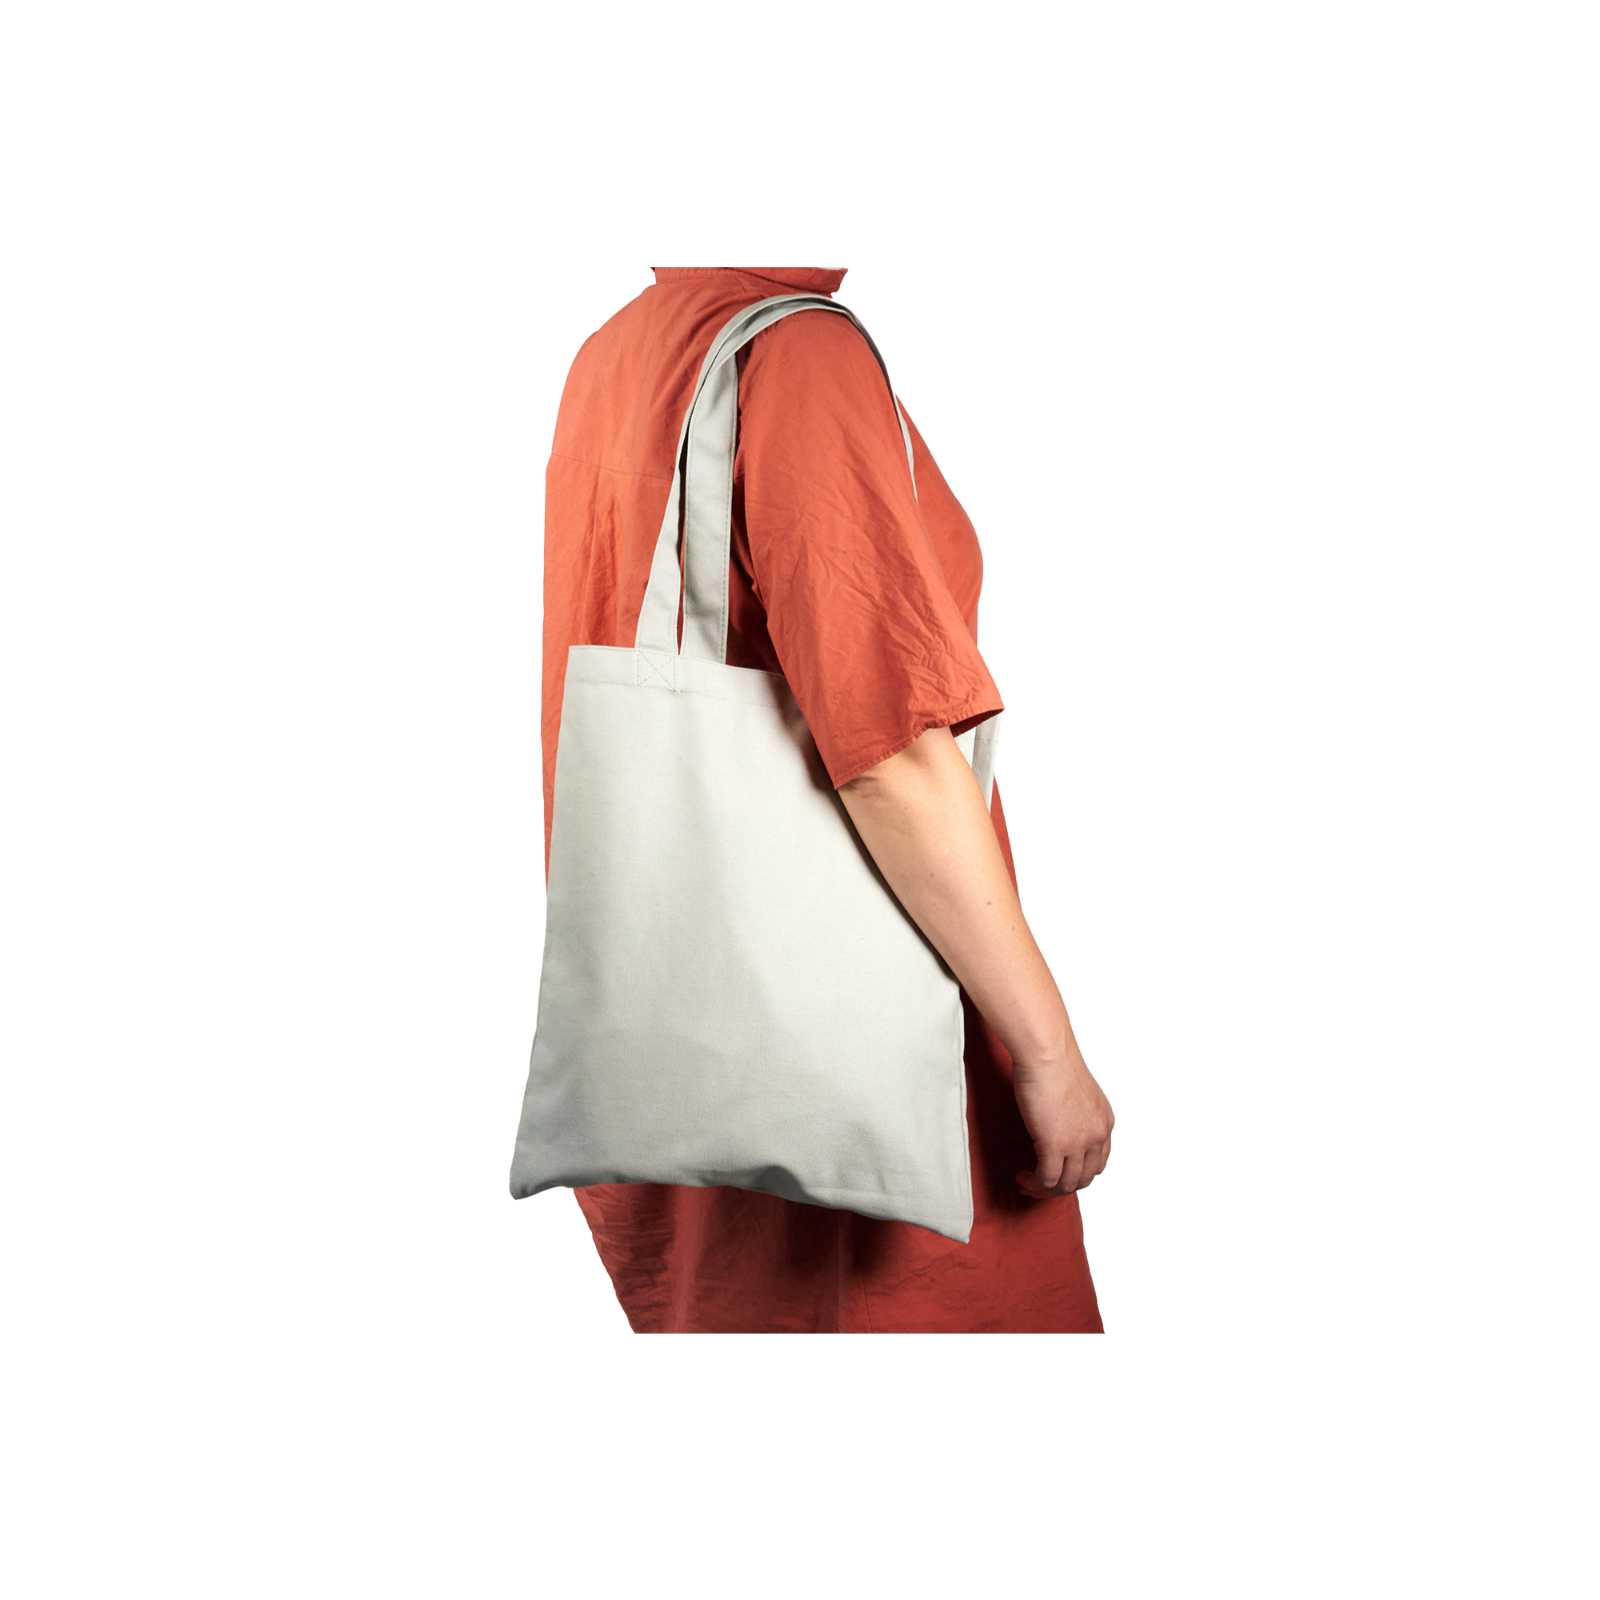 The Daily Tote Bag - Custom Tote Bags